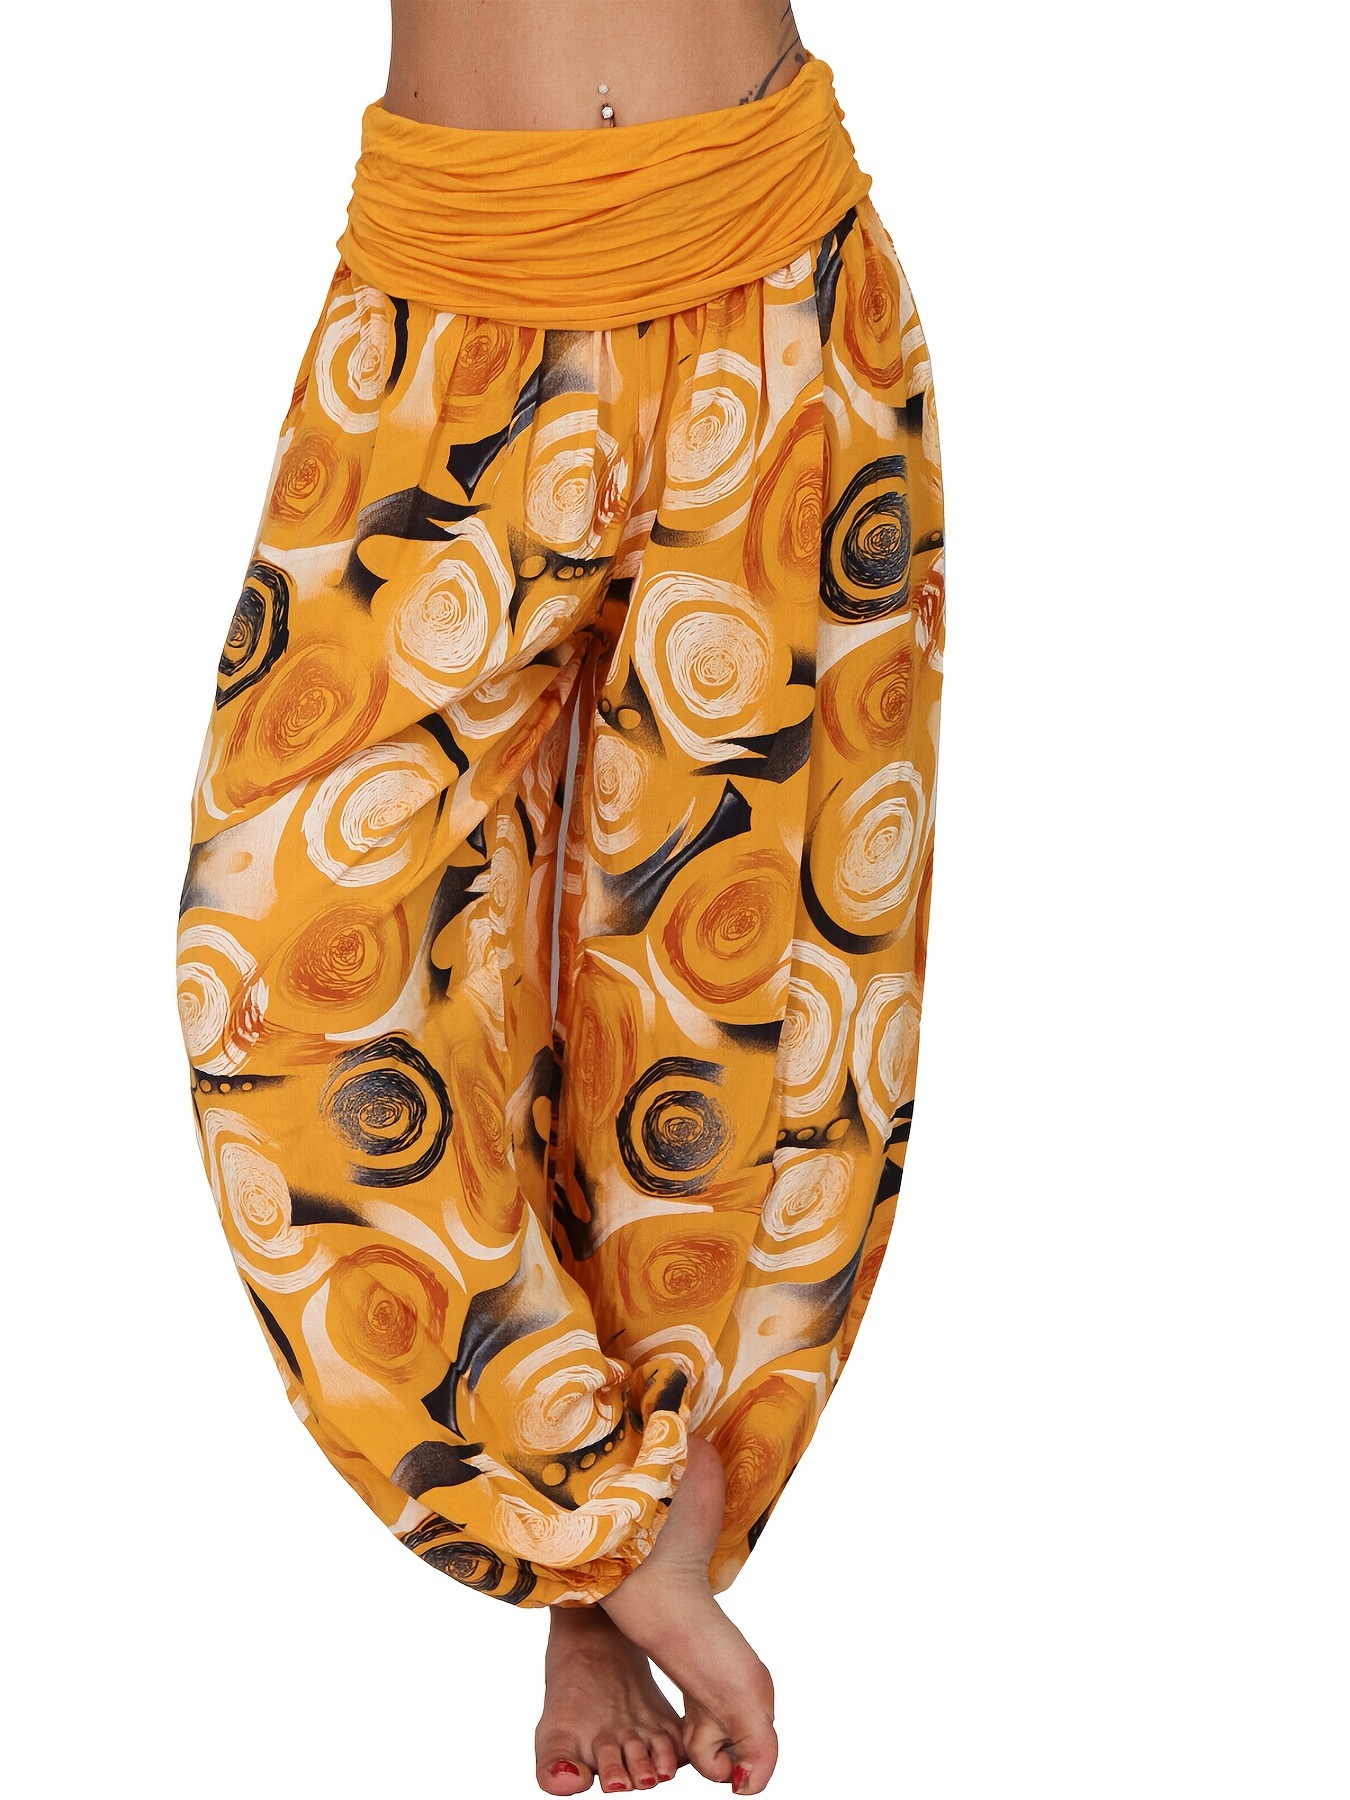 Pantalón bombacho perfecto para las noches frescas de verano #Mujer # bombacho #verano #Massan…